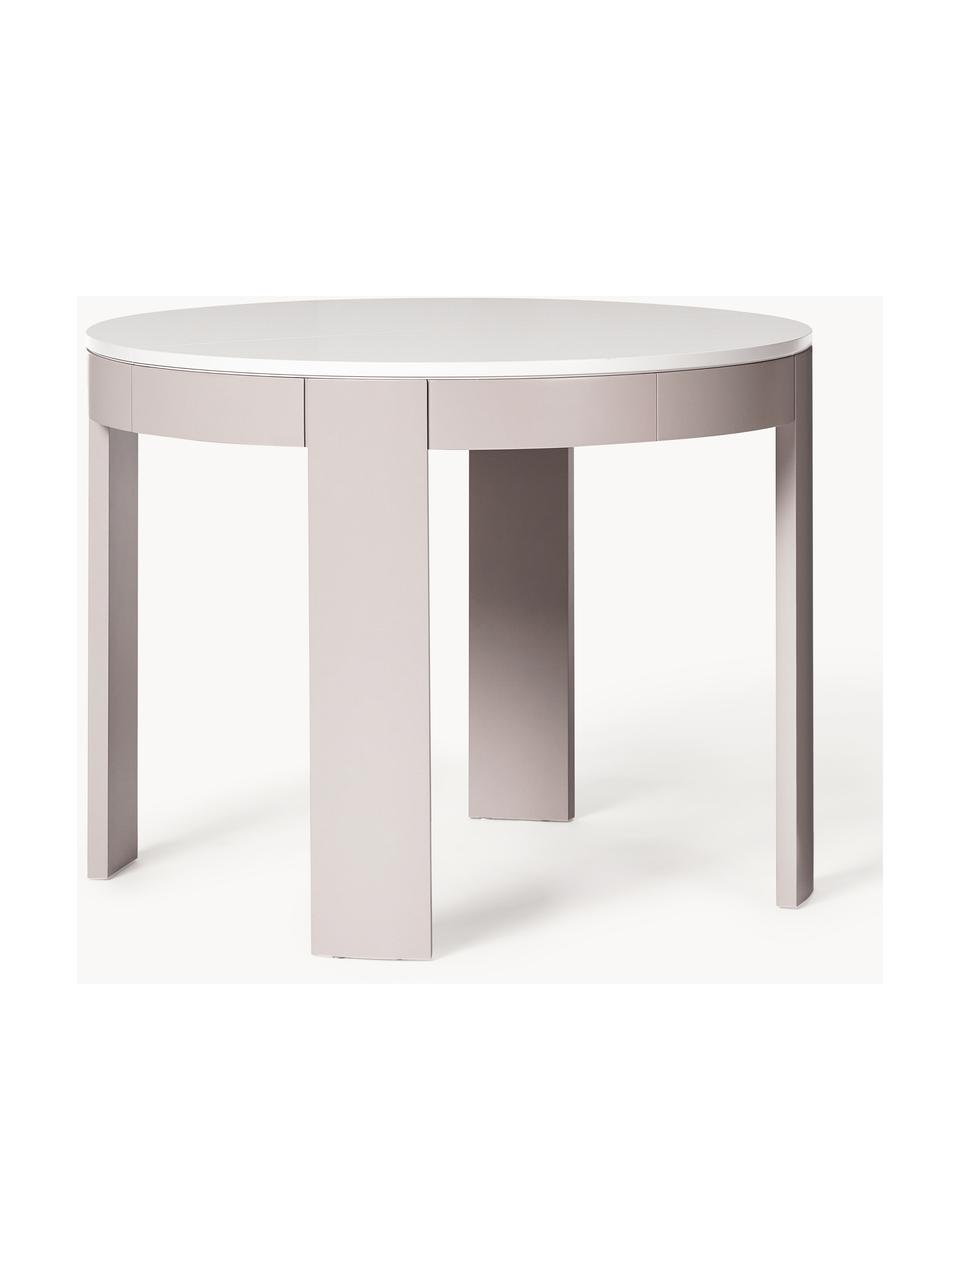 Table extensible Samos, 100 - 140 x 75 cm, Beige clair, beige, larg. 100 - 140 x prof. 100 cm